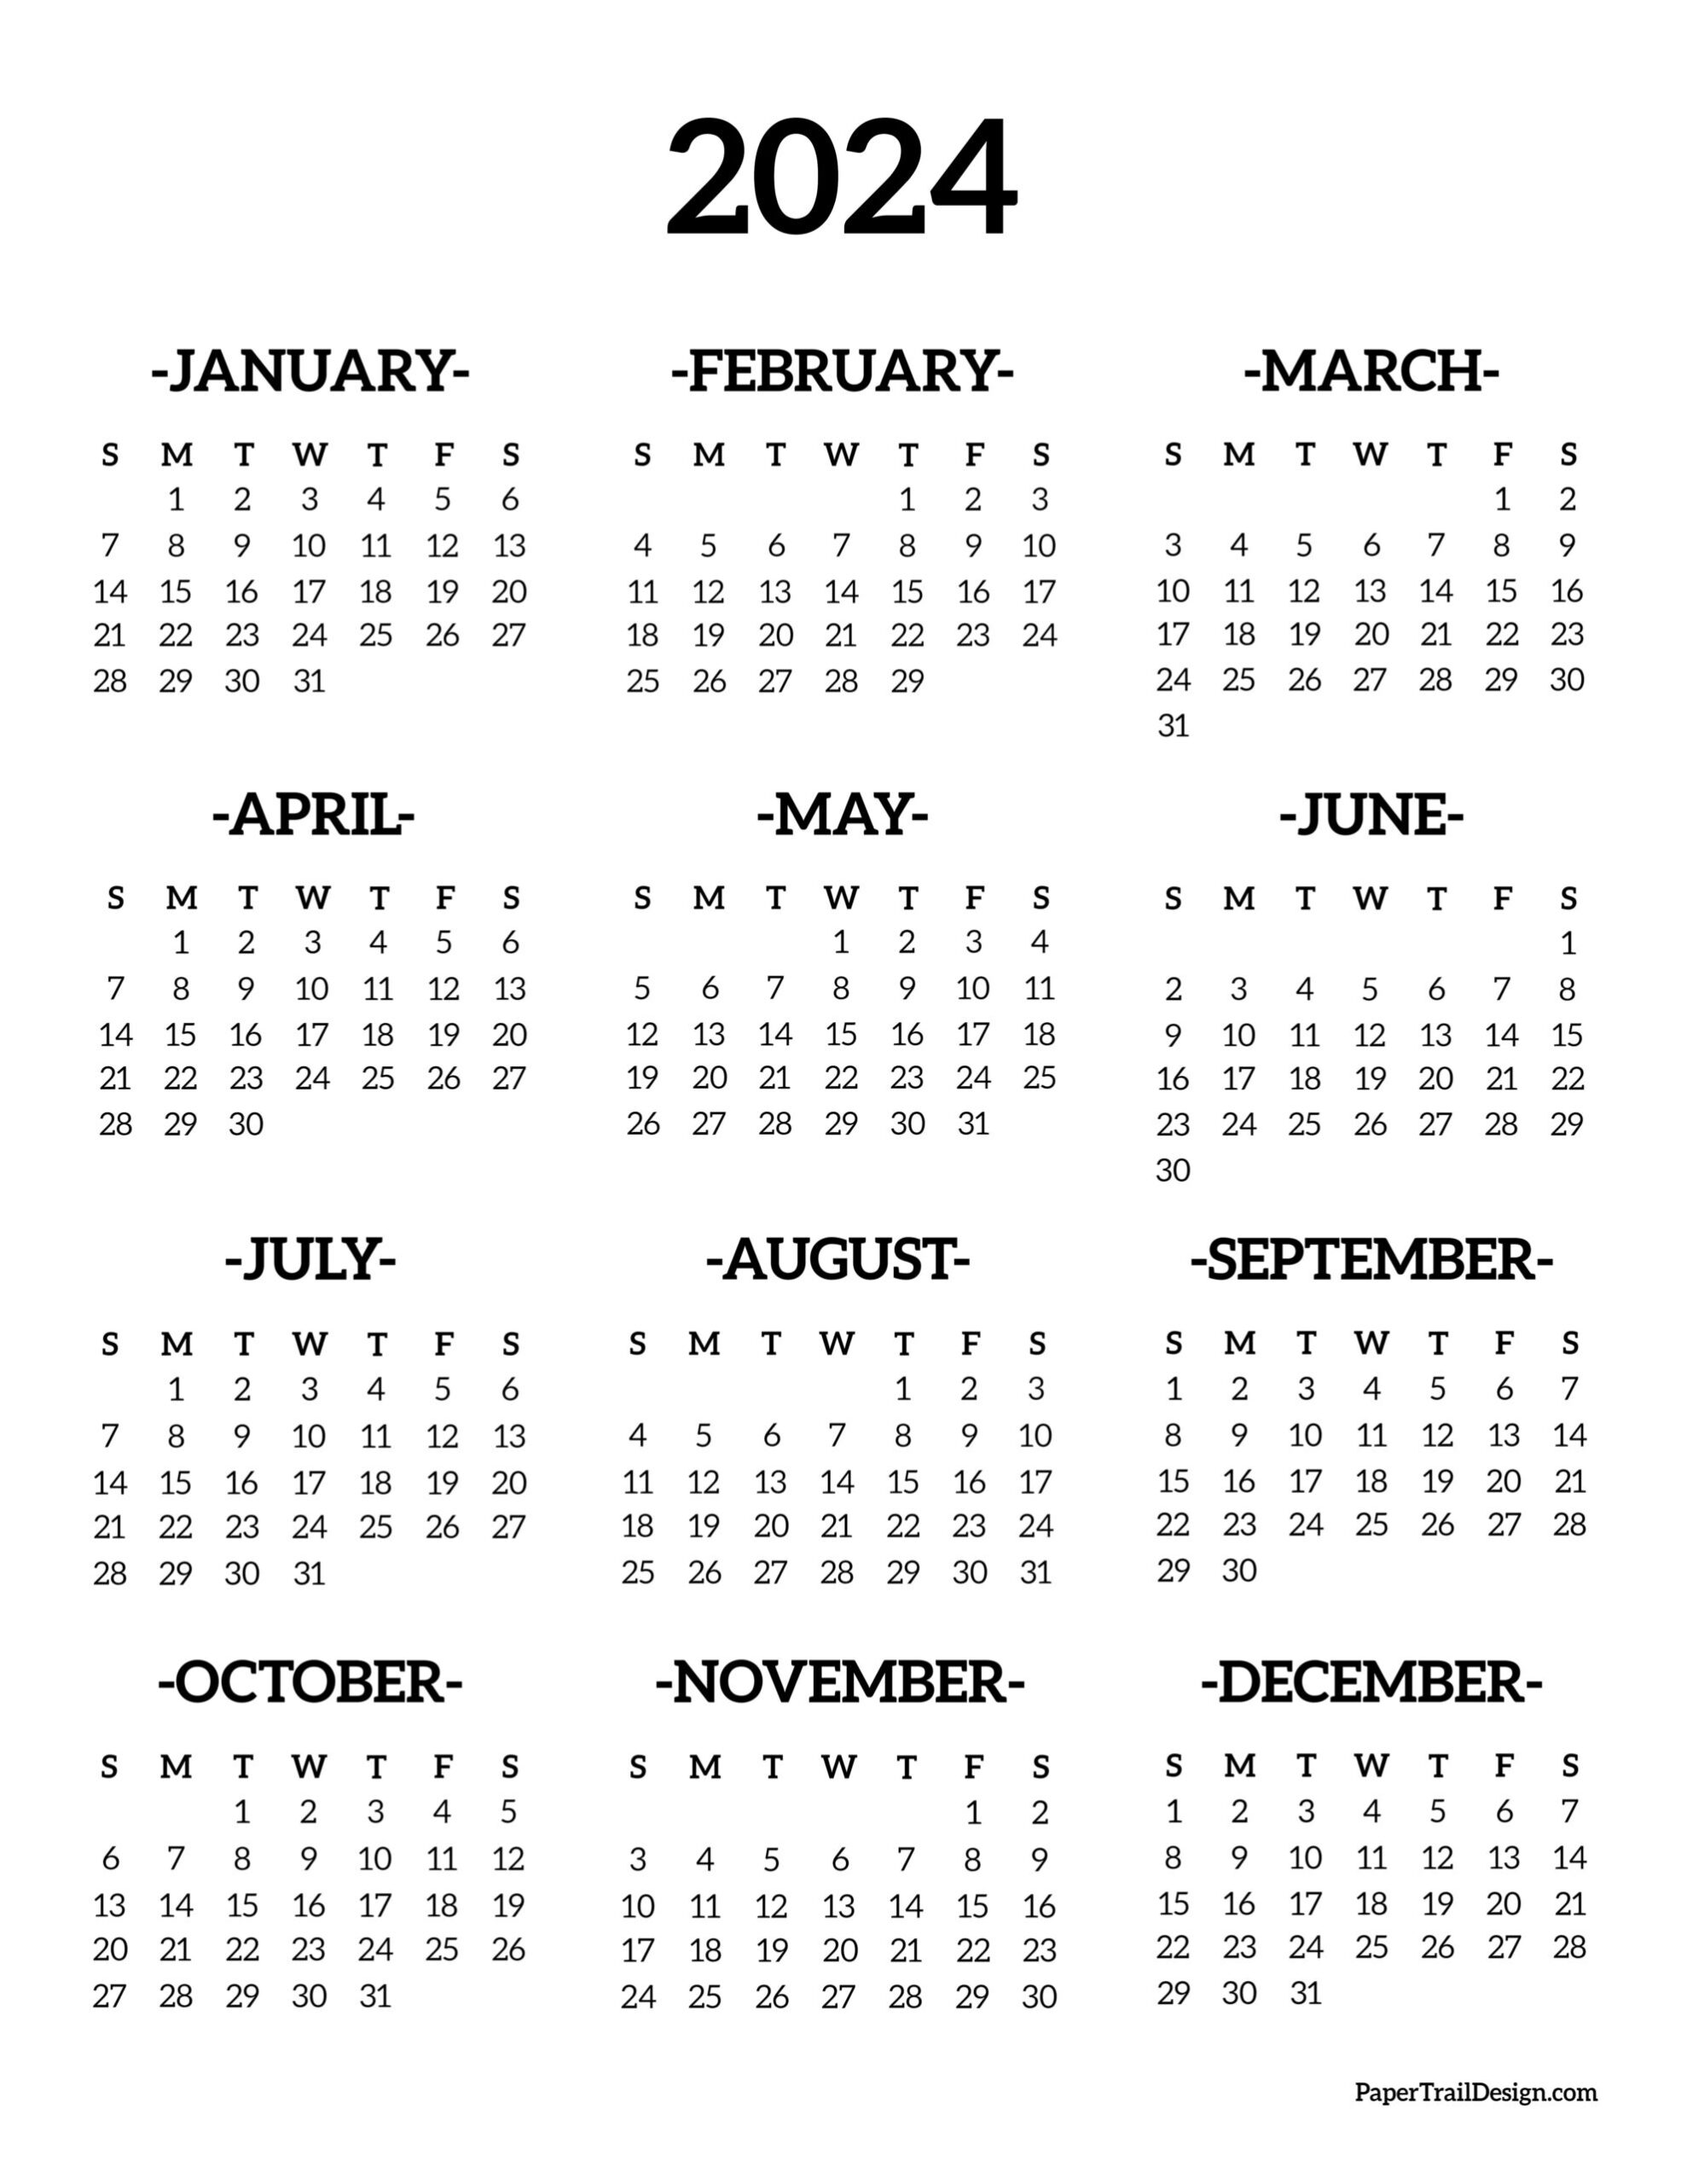 Calendar 2024 Printable One Page - Paper Trail Design | Printable Calendar 2024 Annual